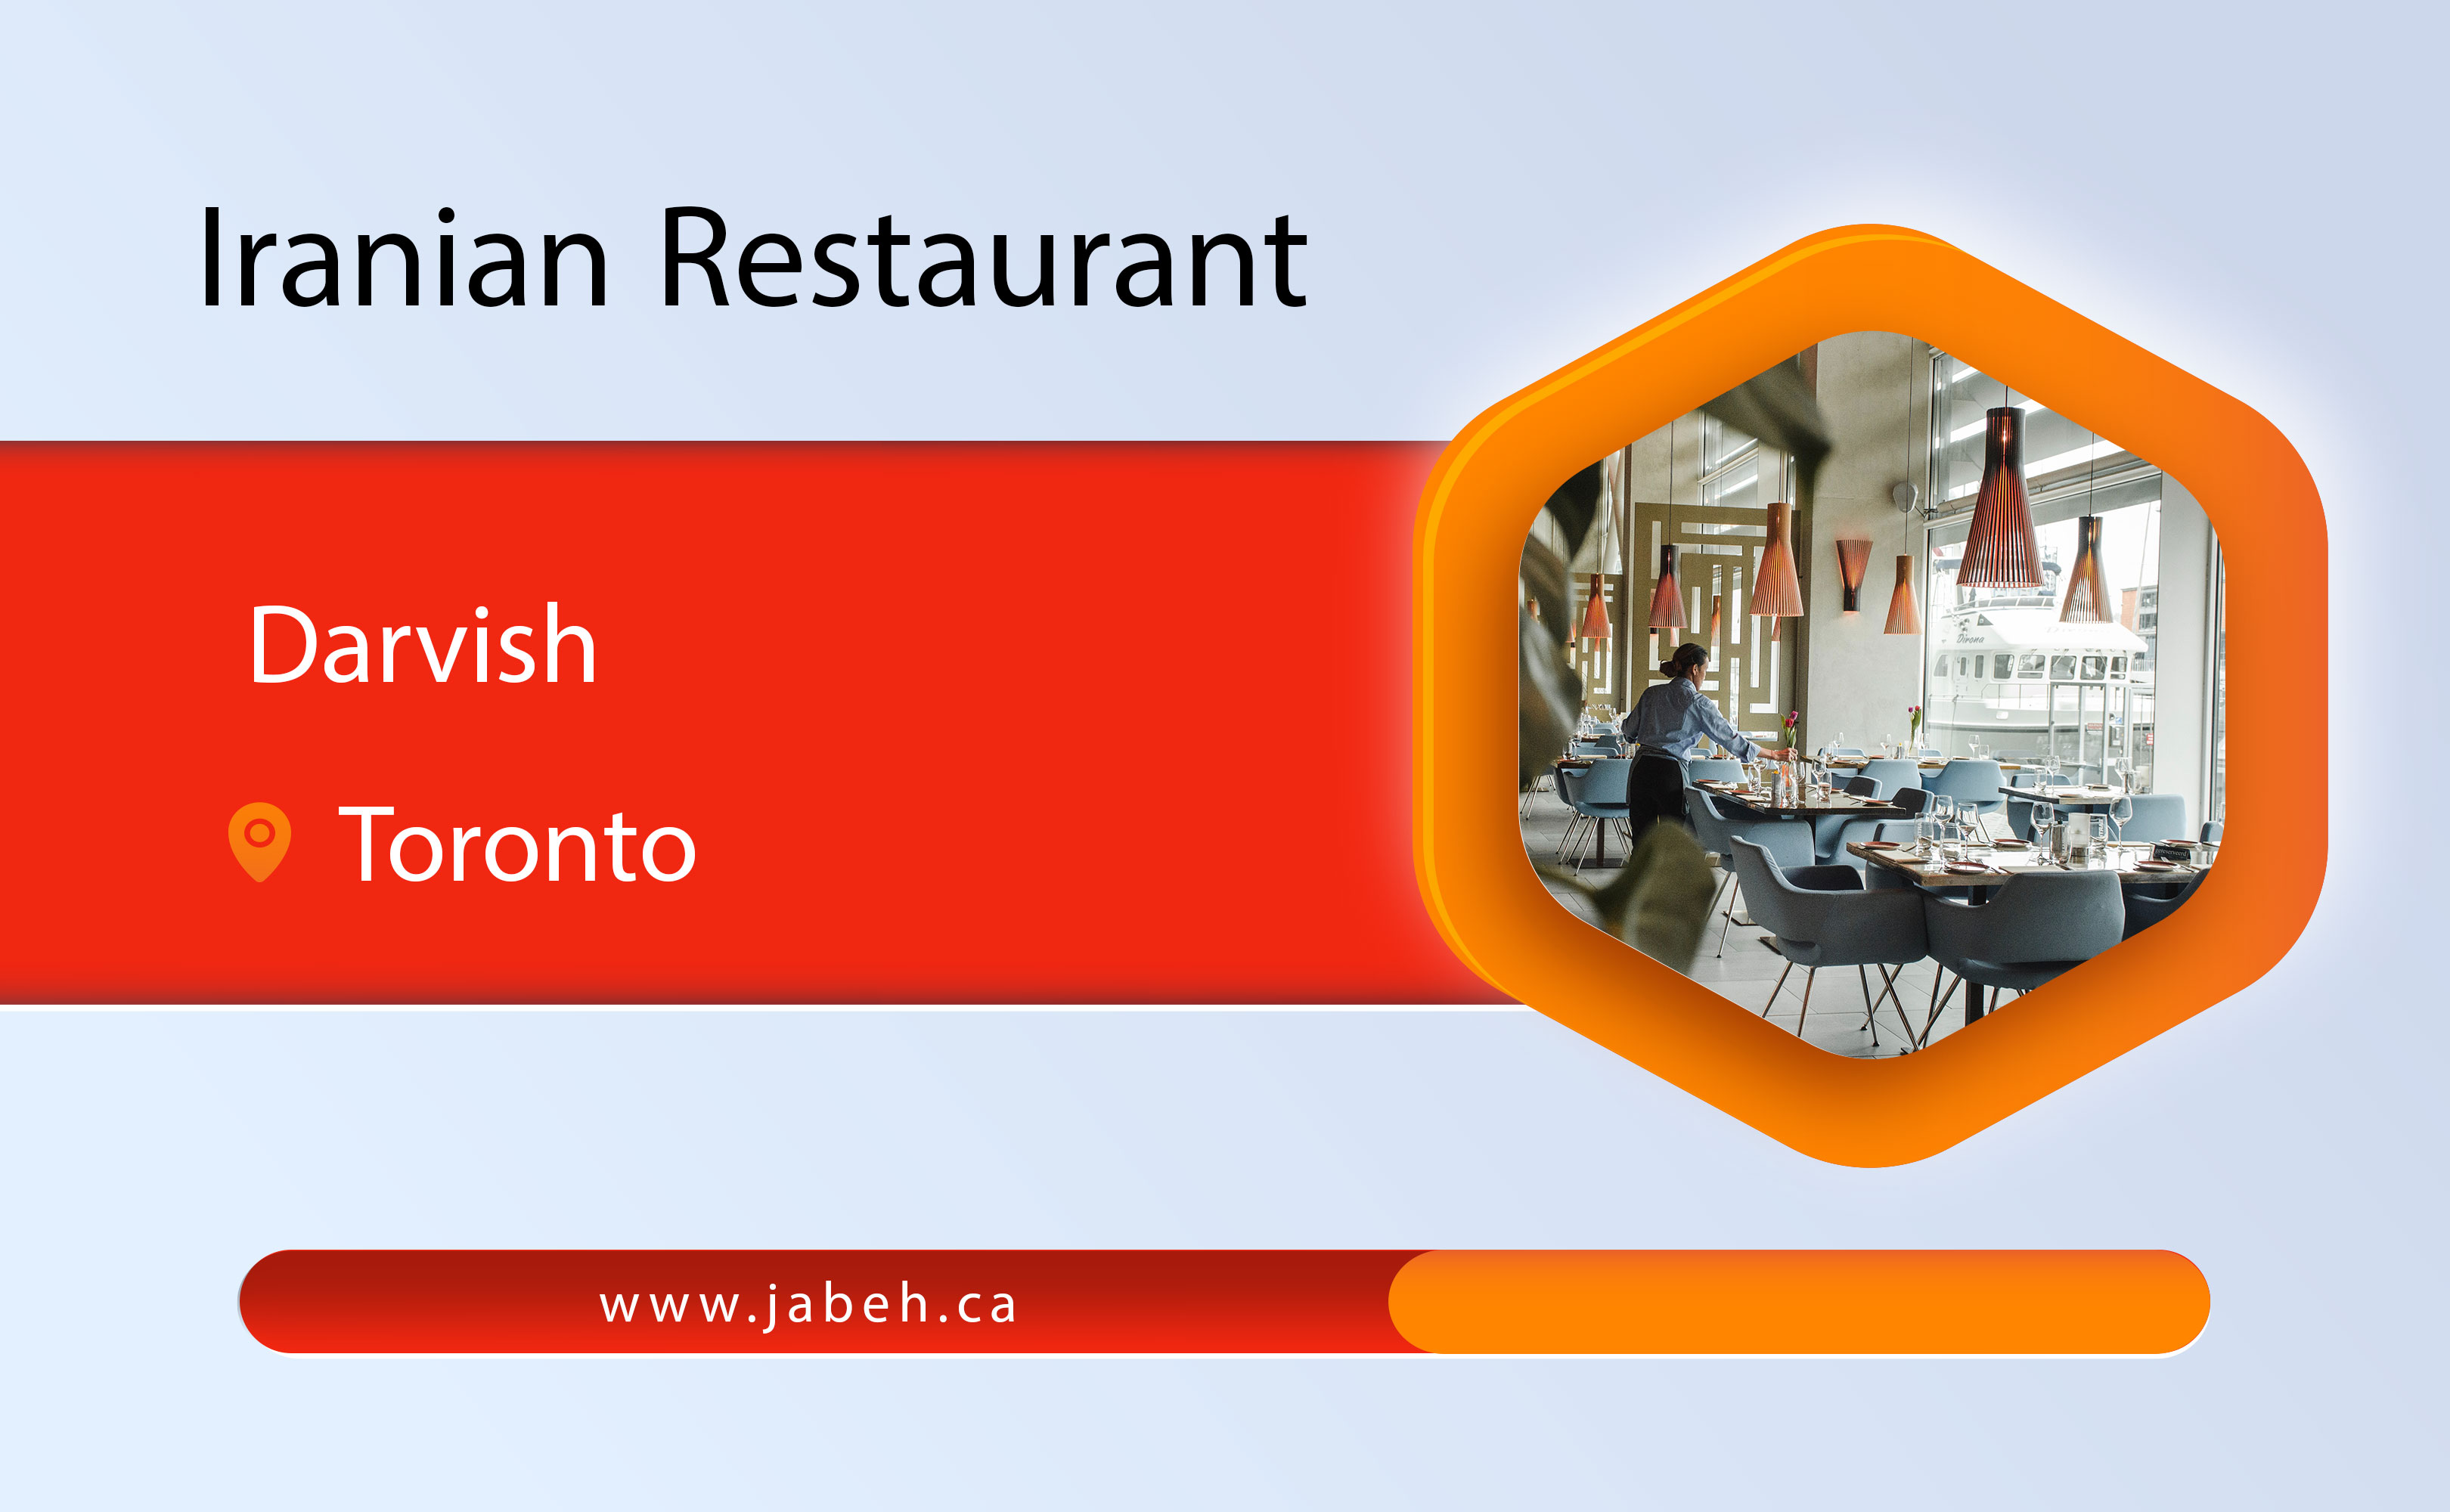 Darvish Iranian restaurant in Toronto